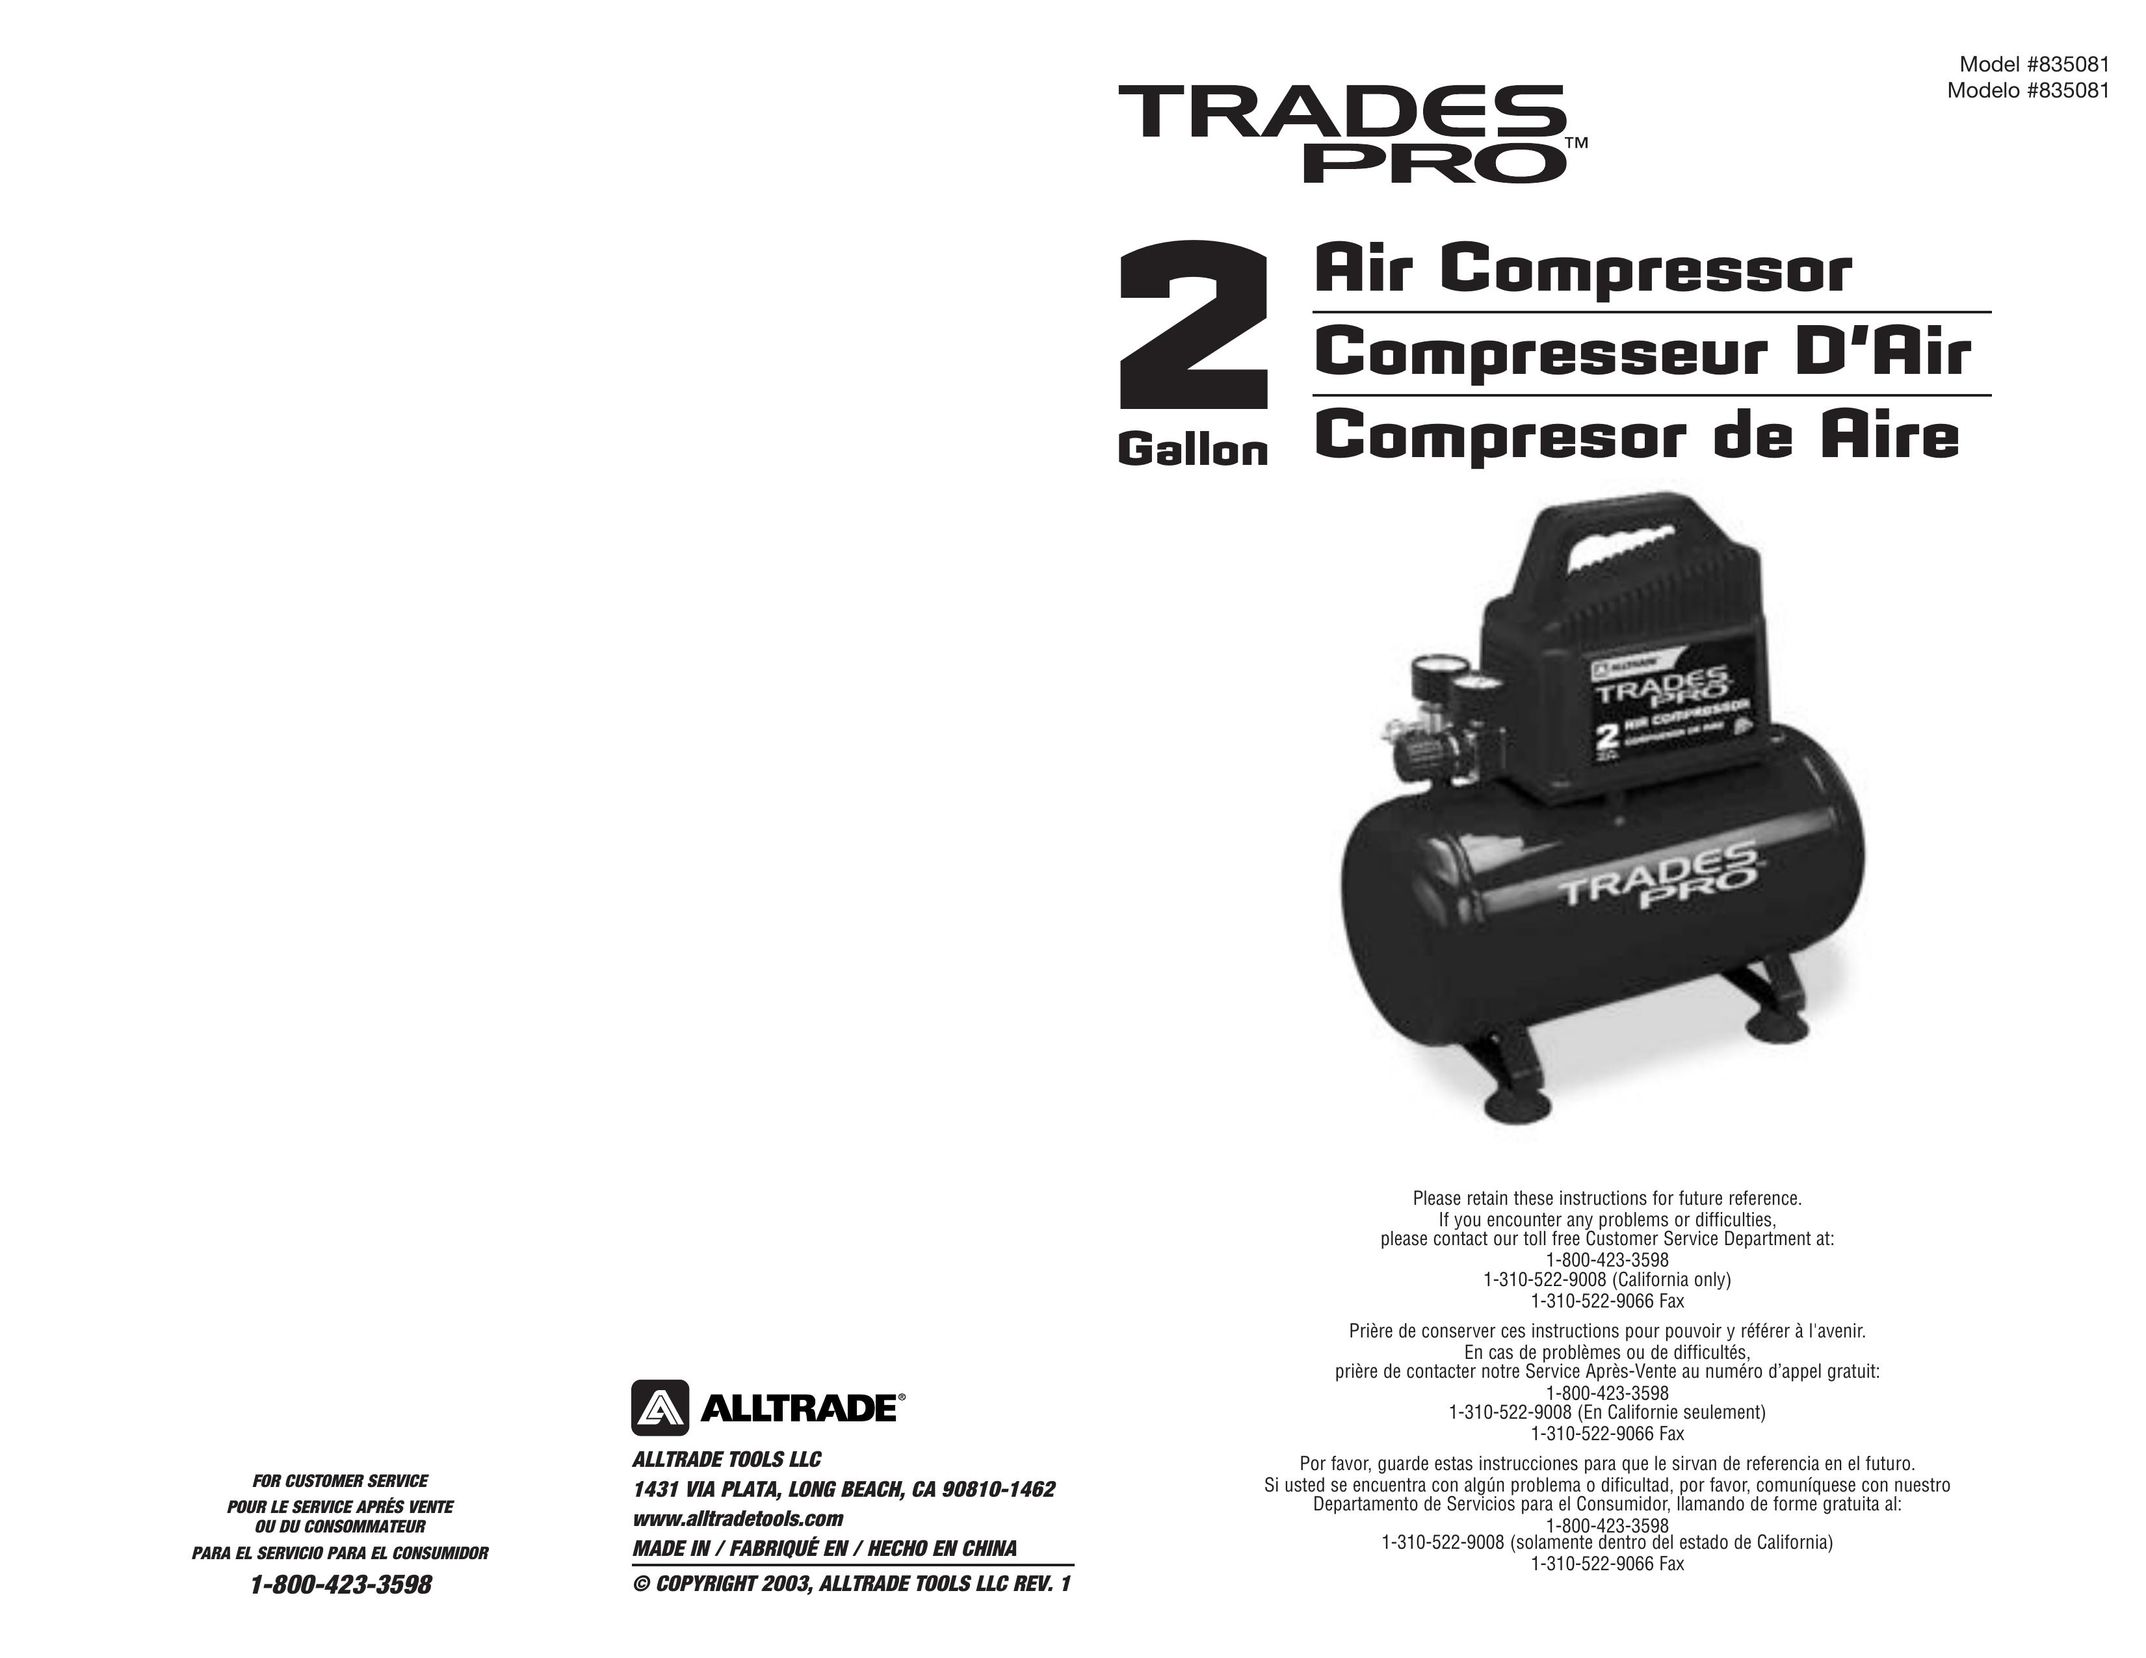 AllTrade 835081 Air Compressor User Manual